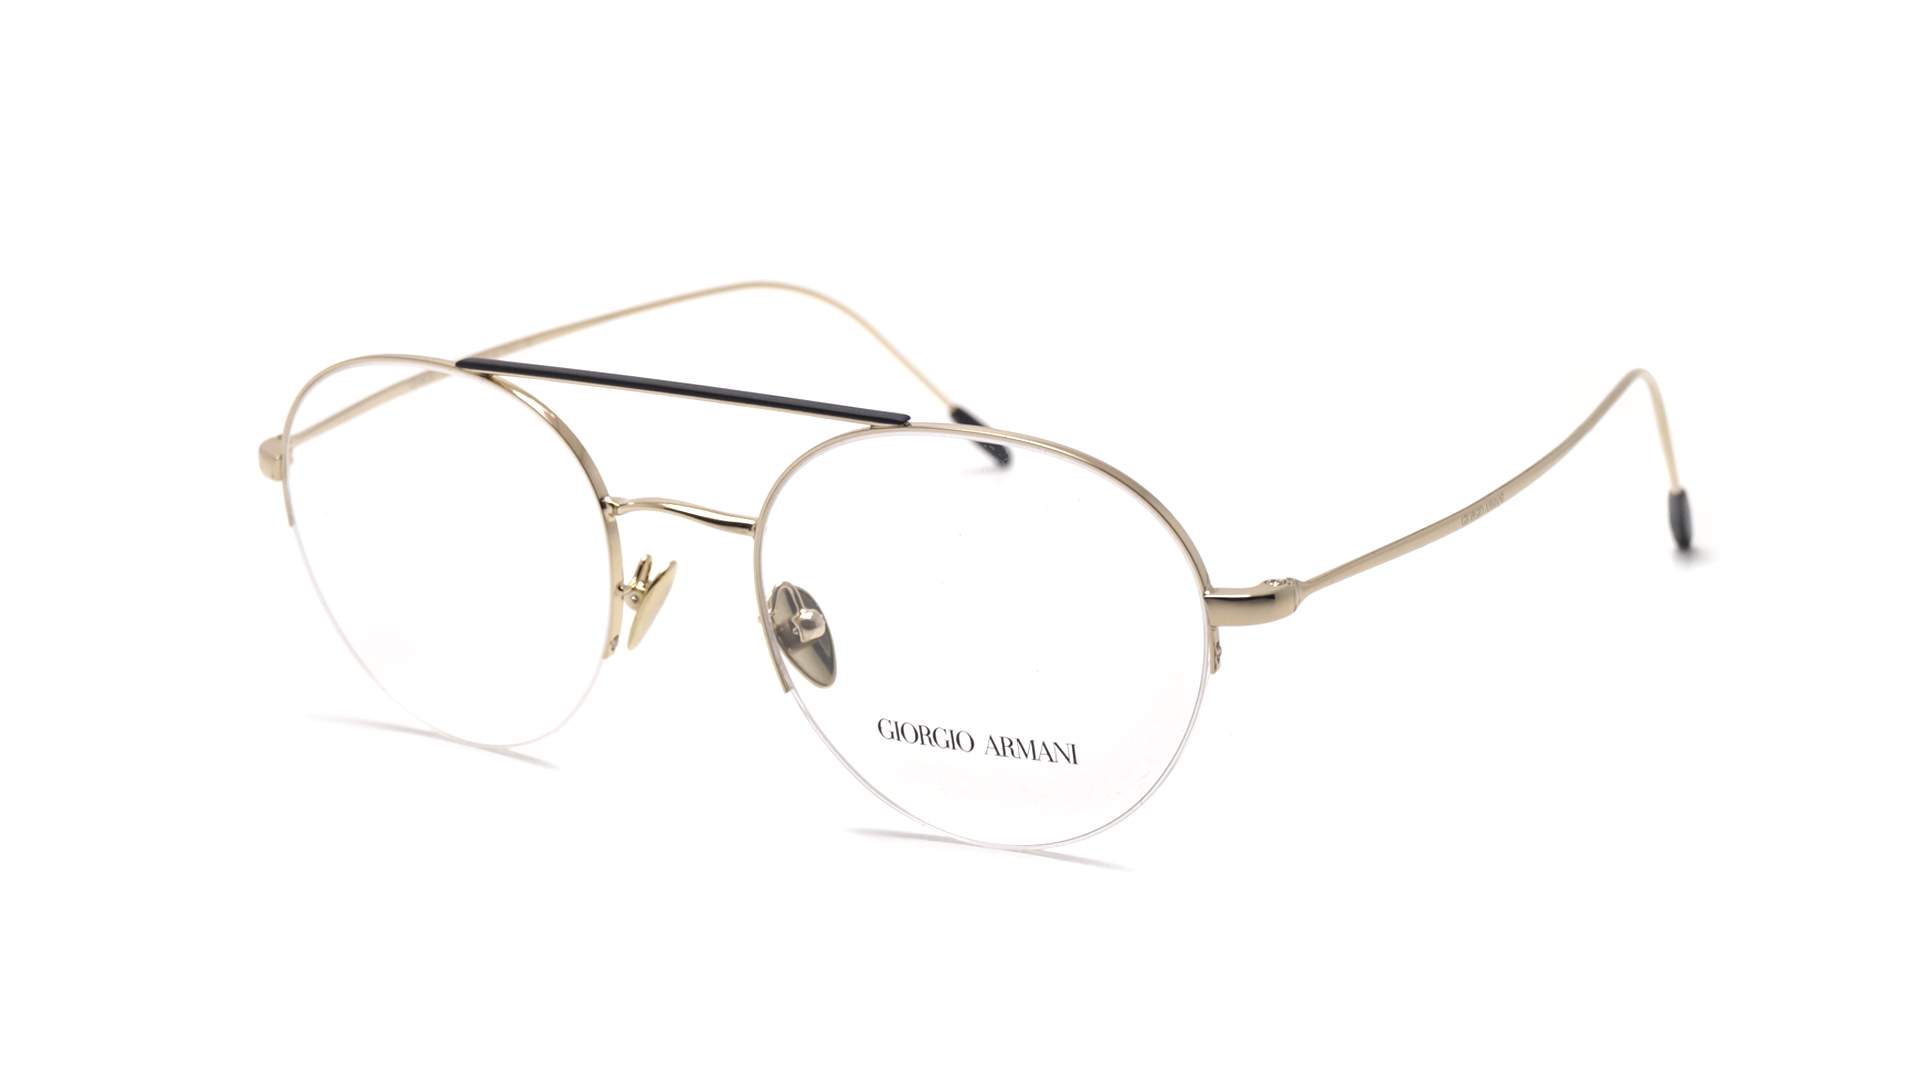 giorgio armani glasses frames